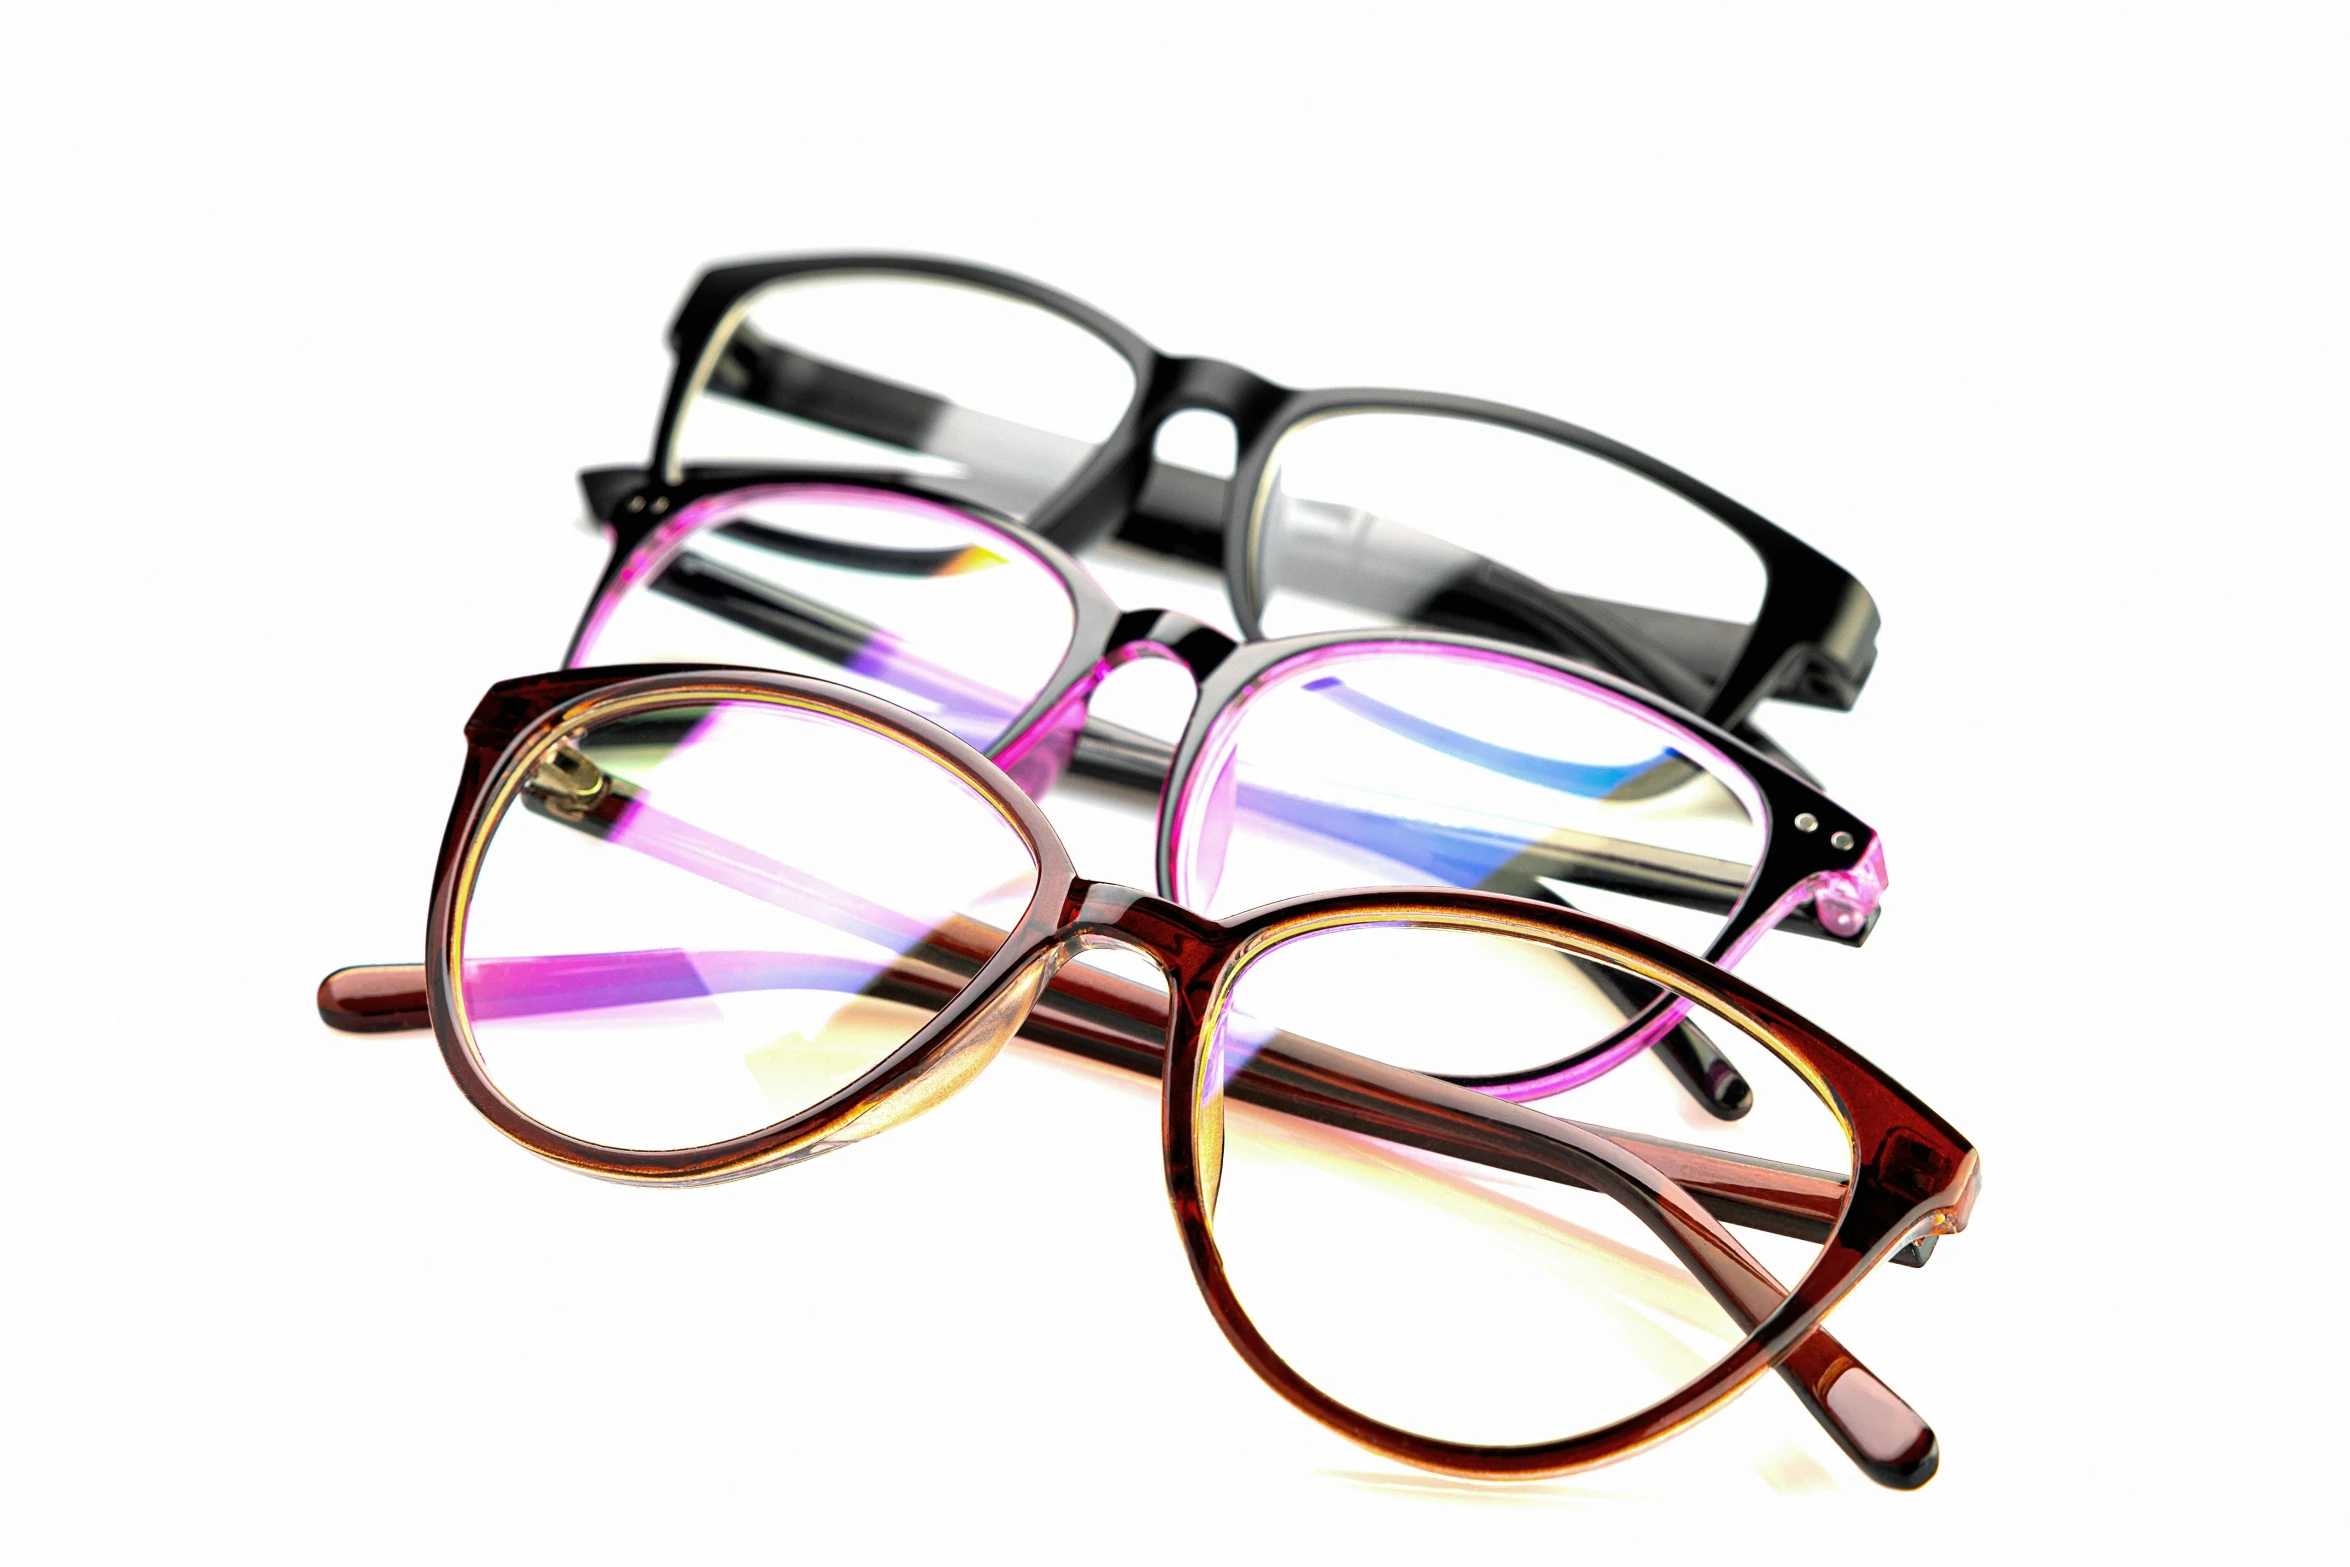 three pair of eyeglasses on white surface